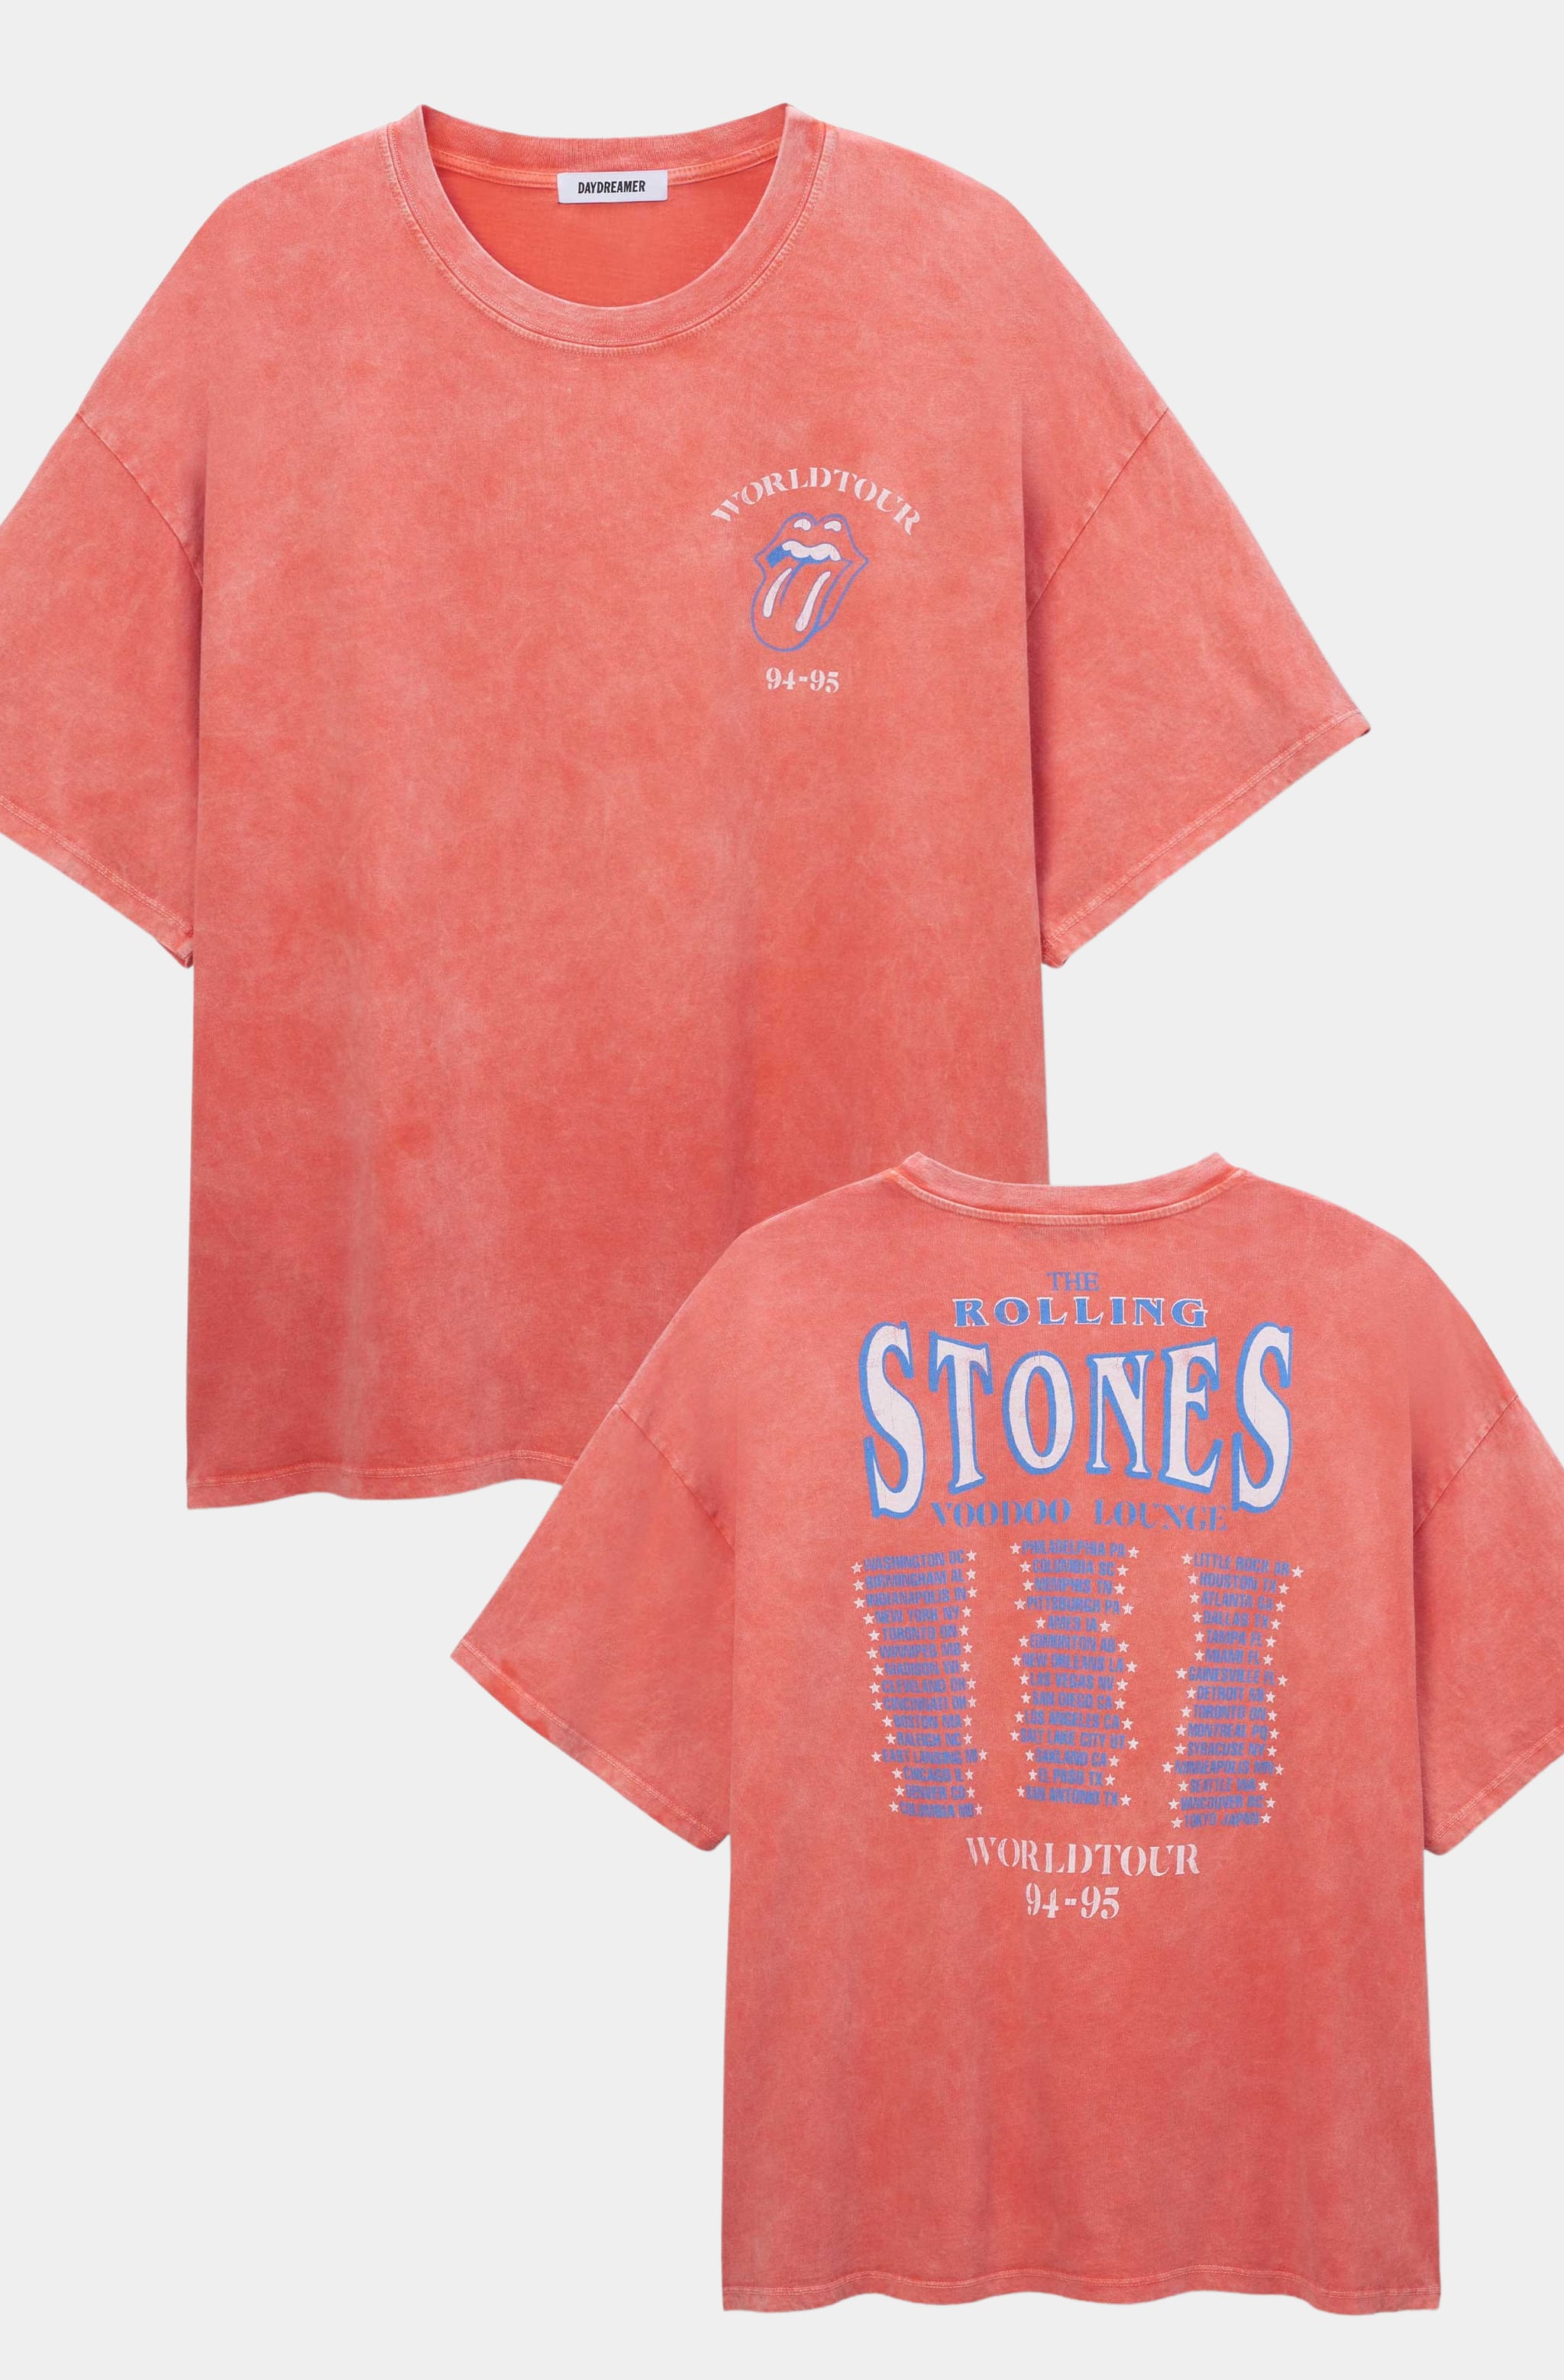 Rolling Stones World Tour 94-95 OS Tee